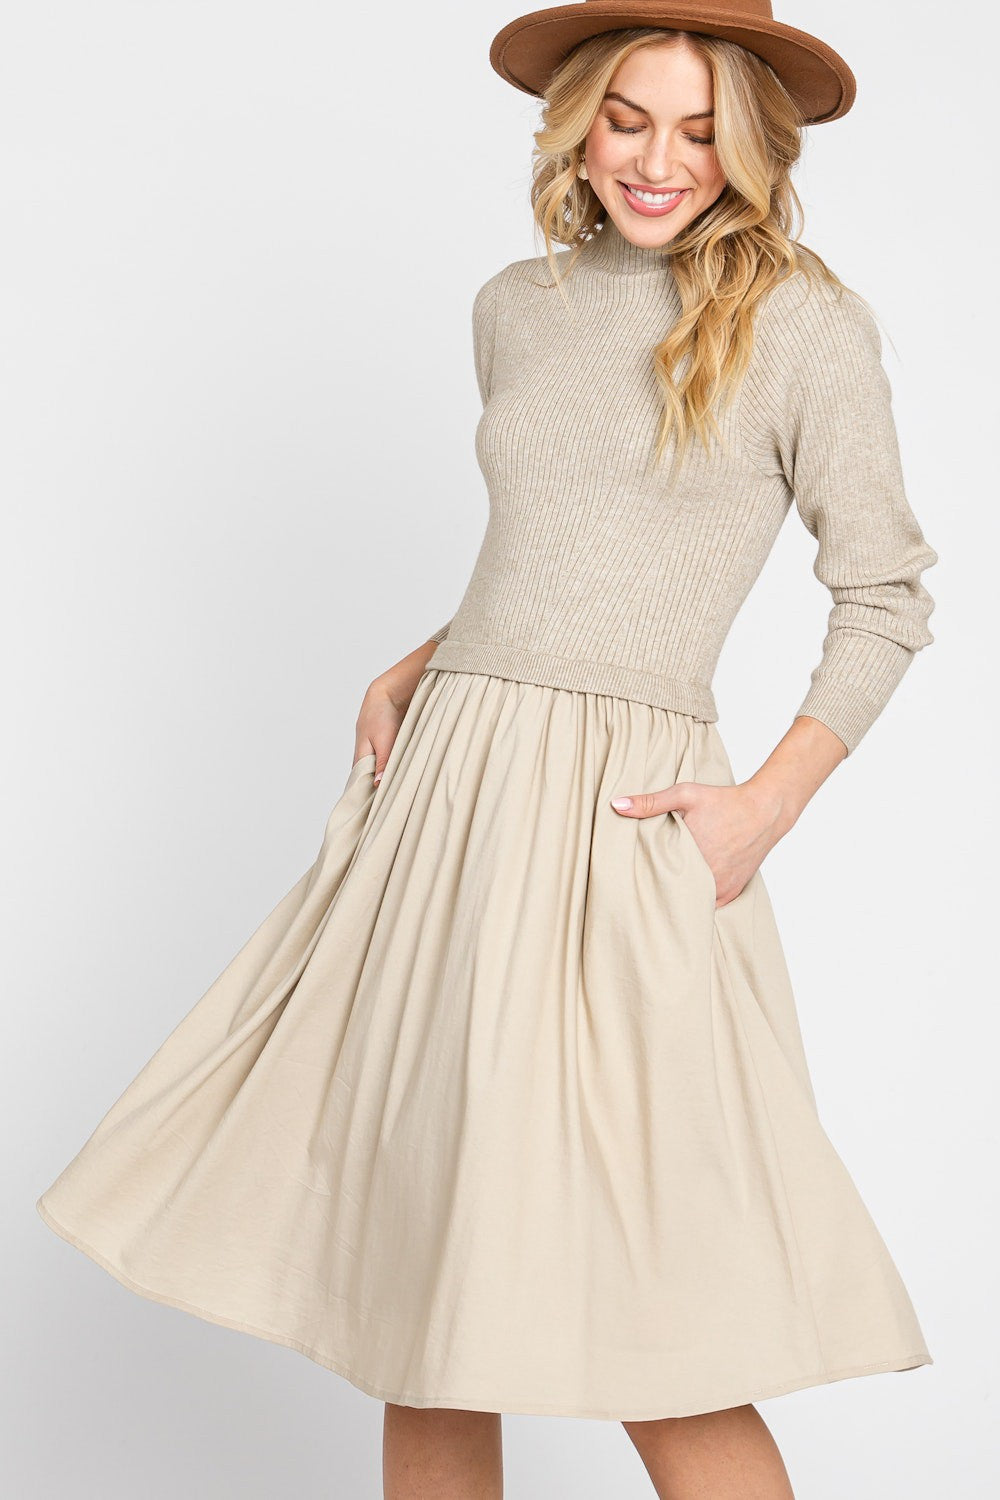 The Afton Sweater Dress